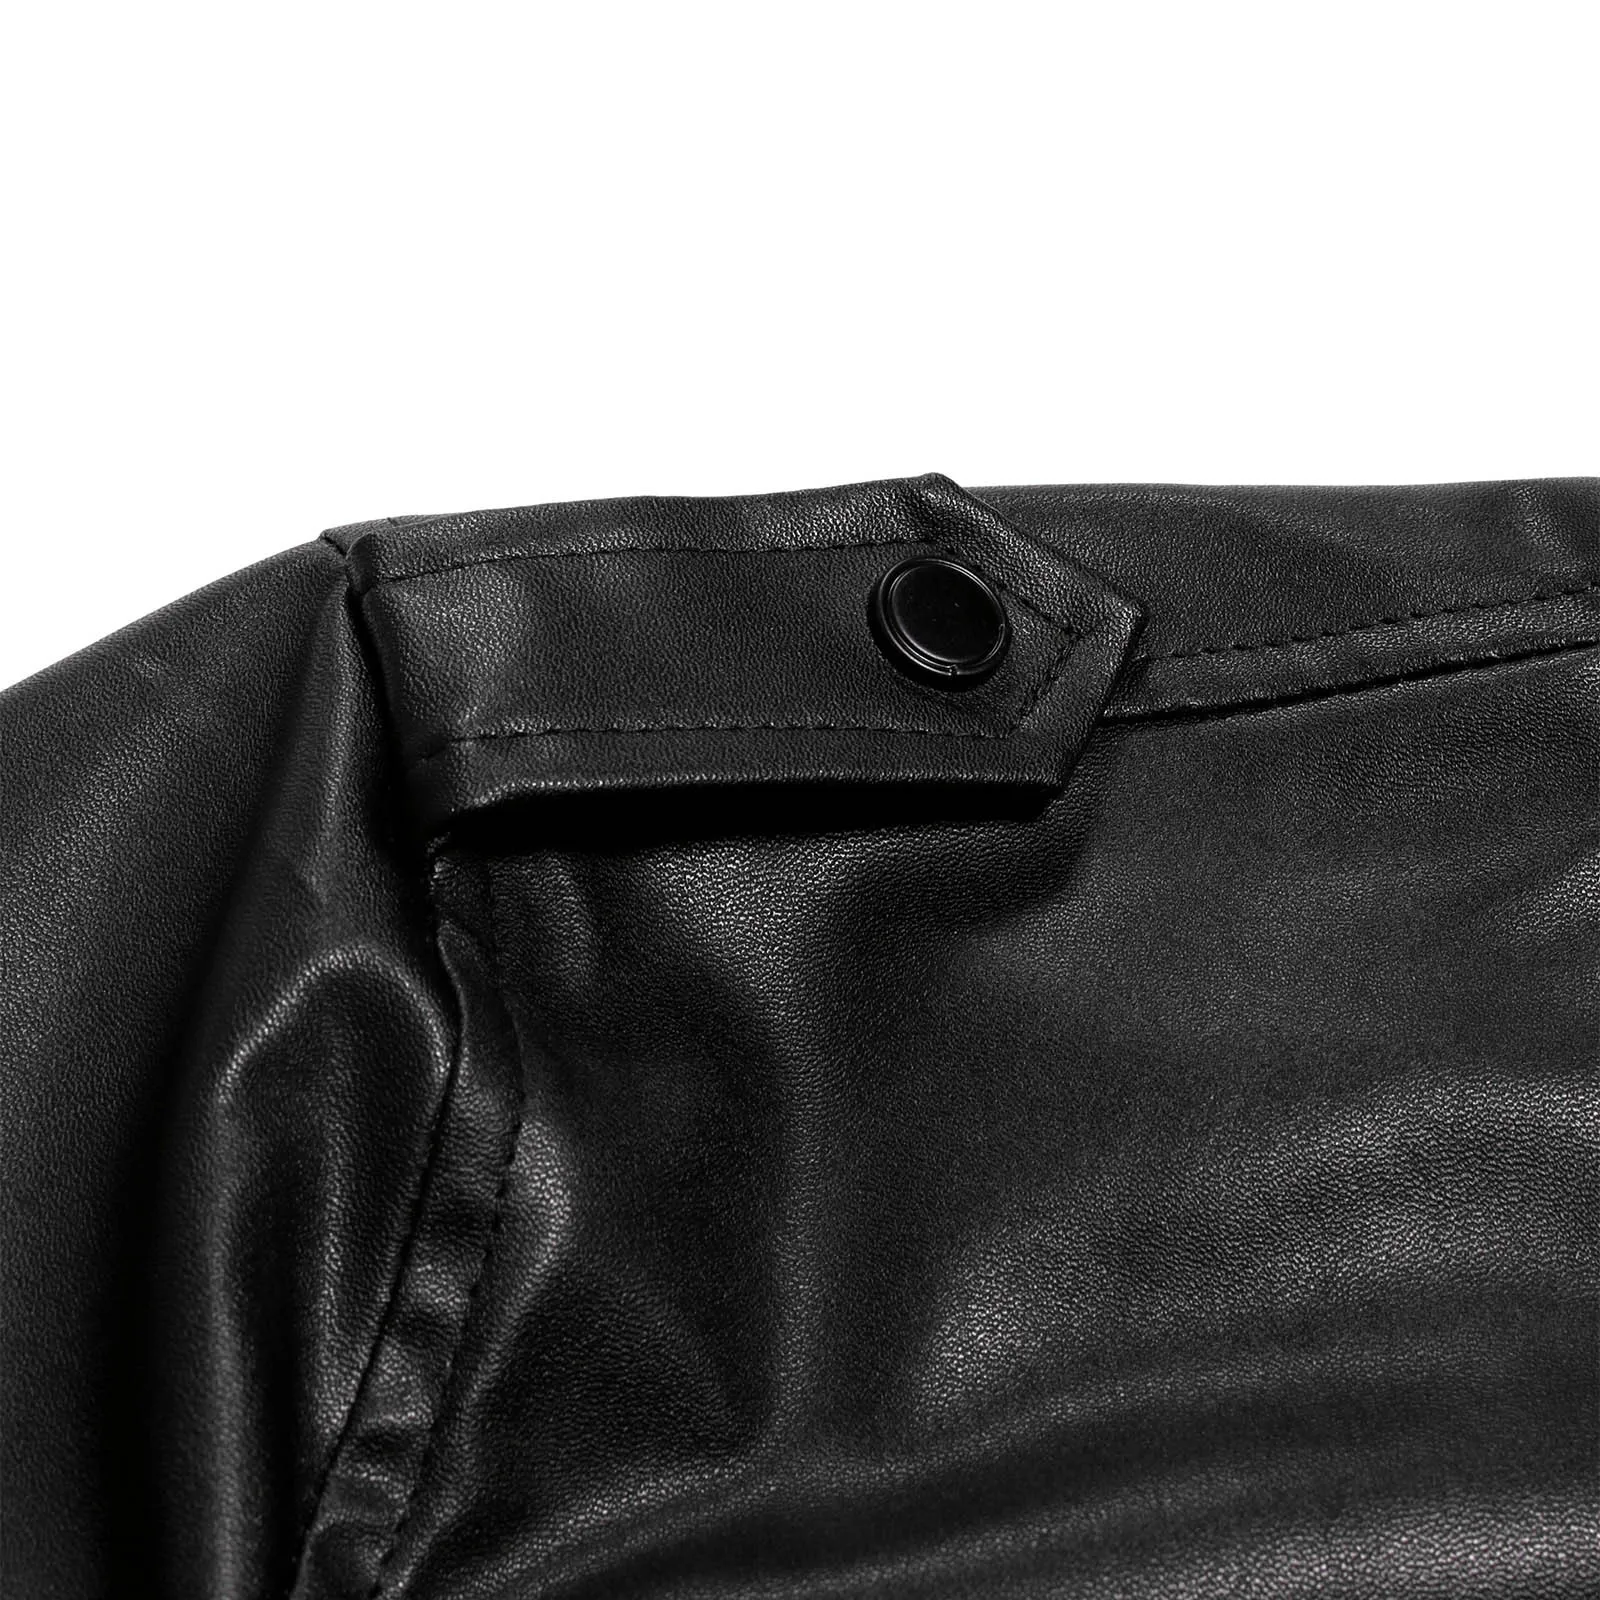 winter soldier jacket Men's Slim Leather Jacket Stand Collar Zipper Pocket Short Jacket Coat Male Slim-fit Stand-collar Cropped Leather Jacket genuine leather motorcycle jackets